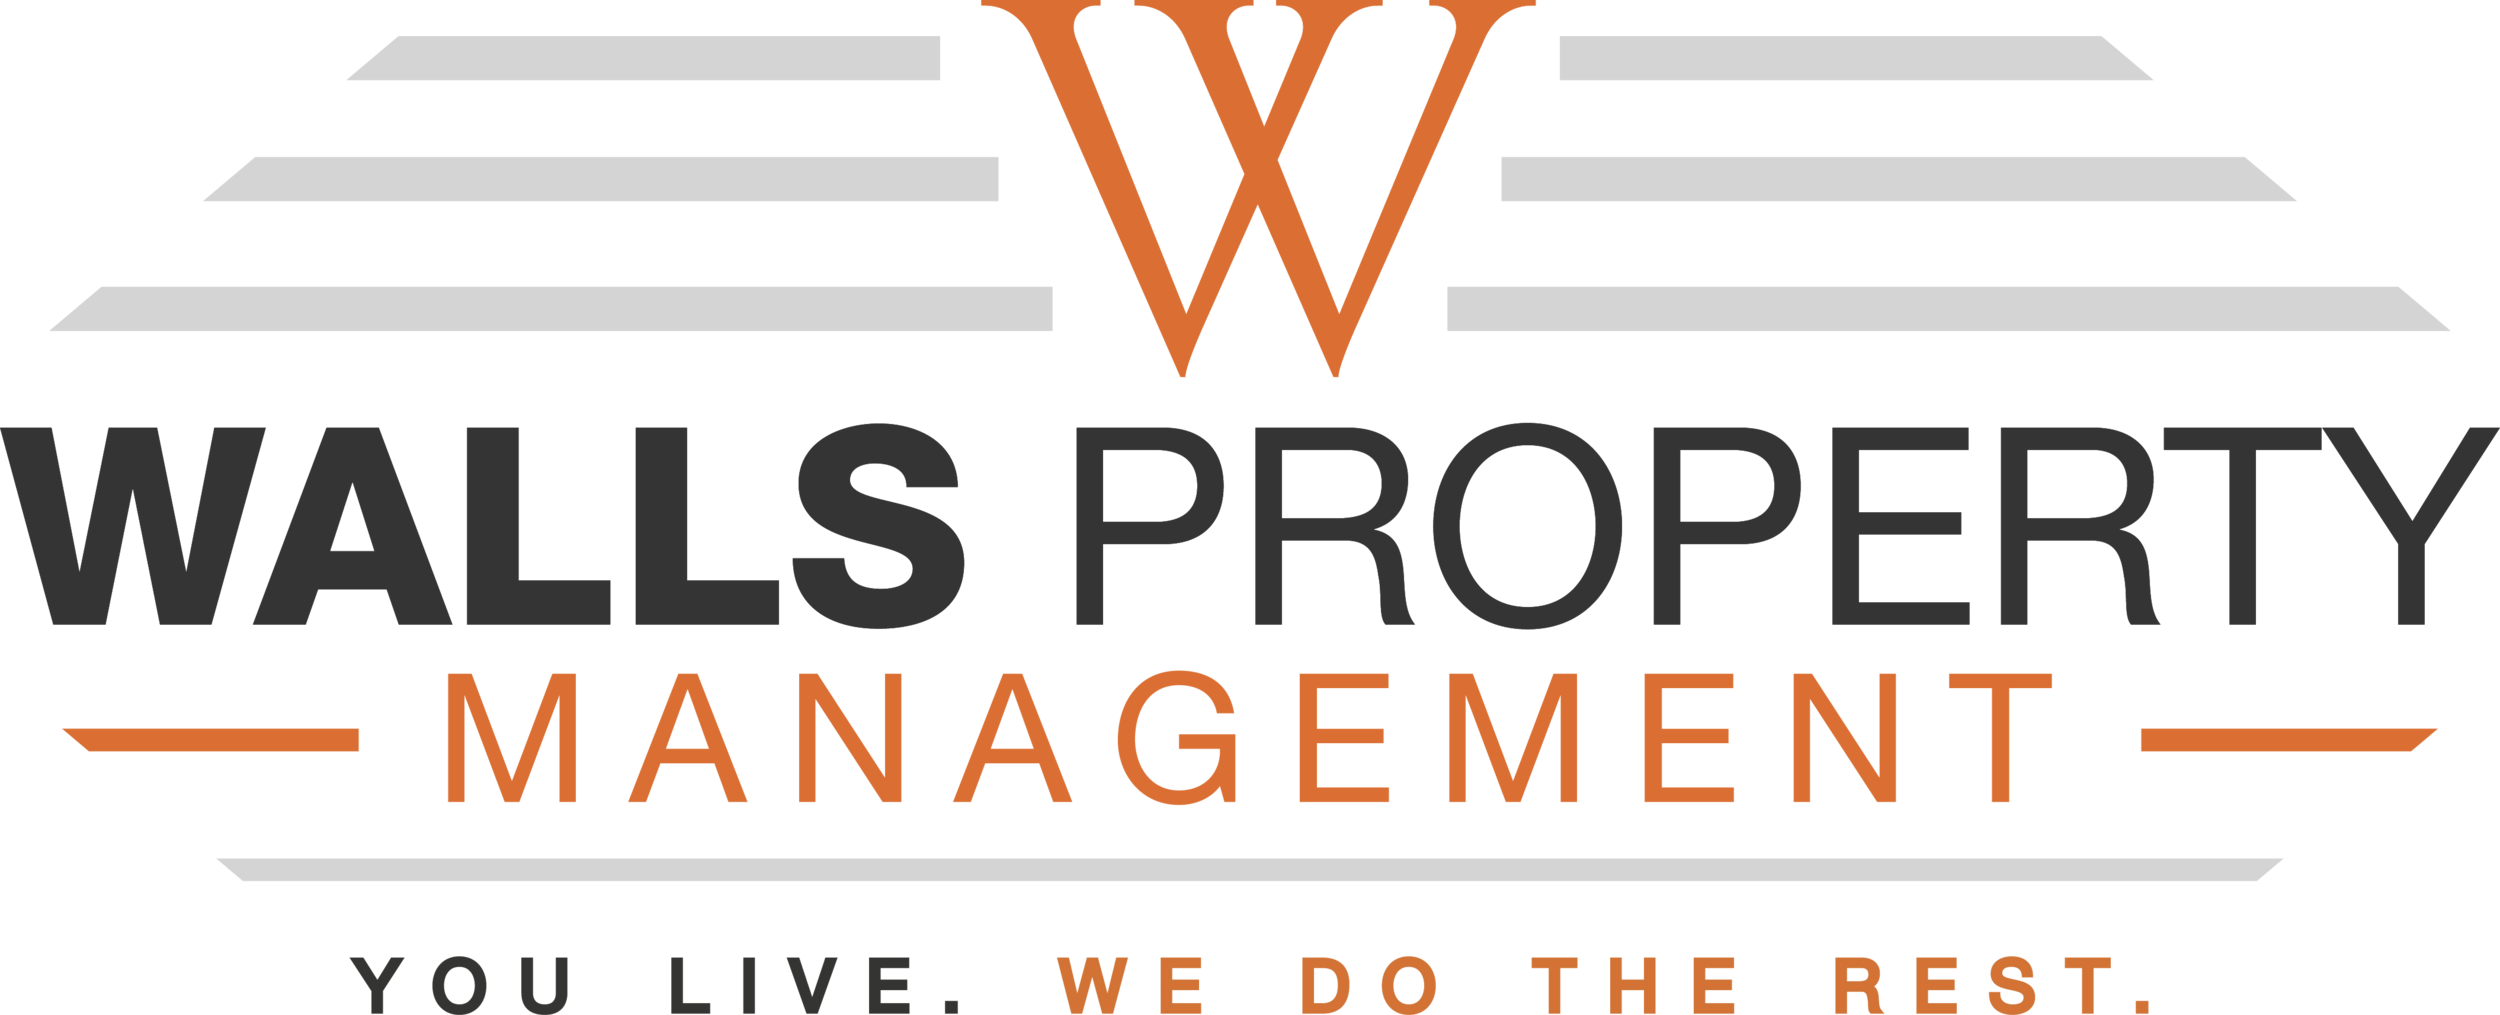 Walls-Property-Management.png